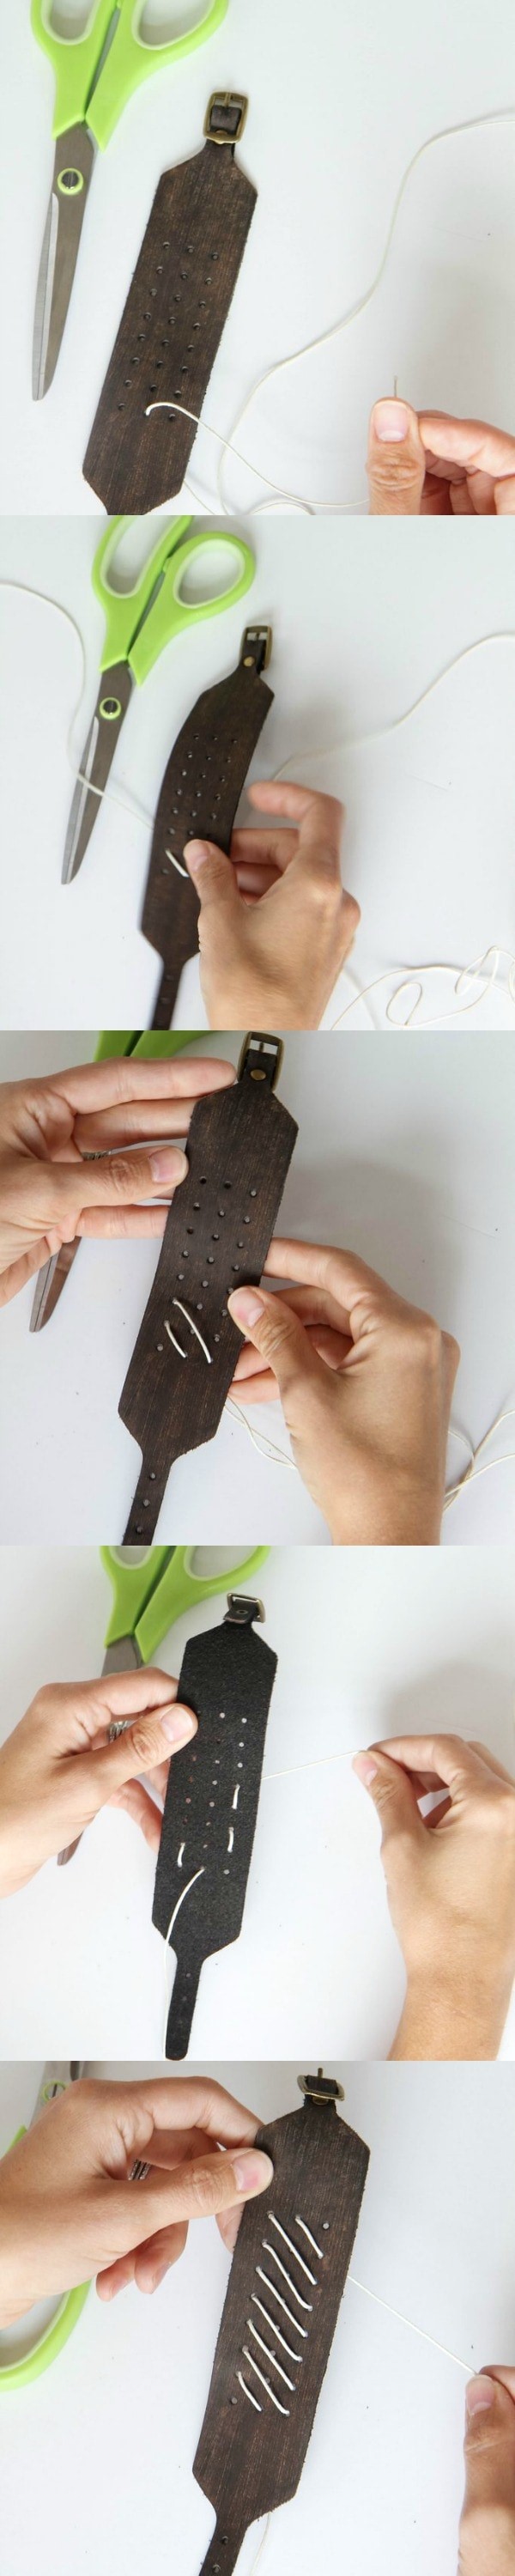 DIY Fitbit Bracelet Tutorial from MomAdvice.com.